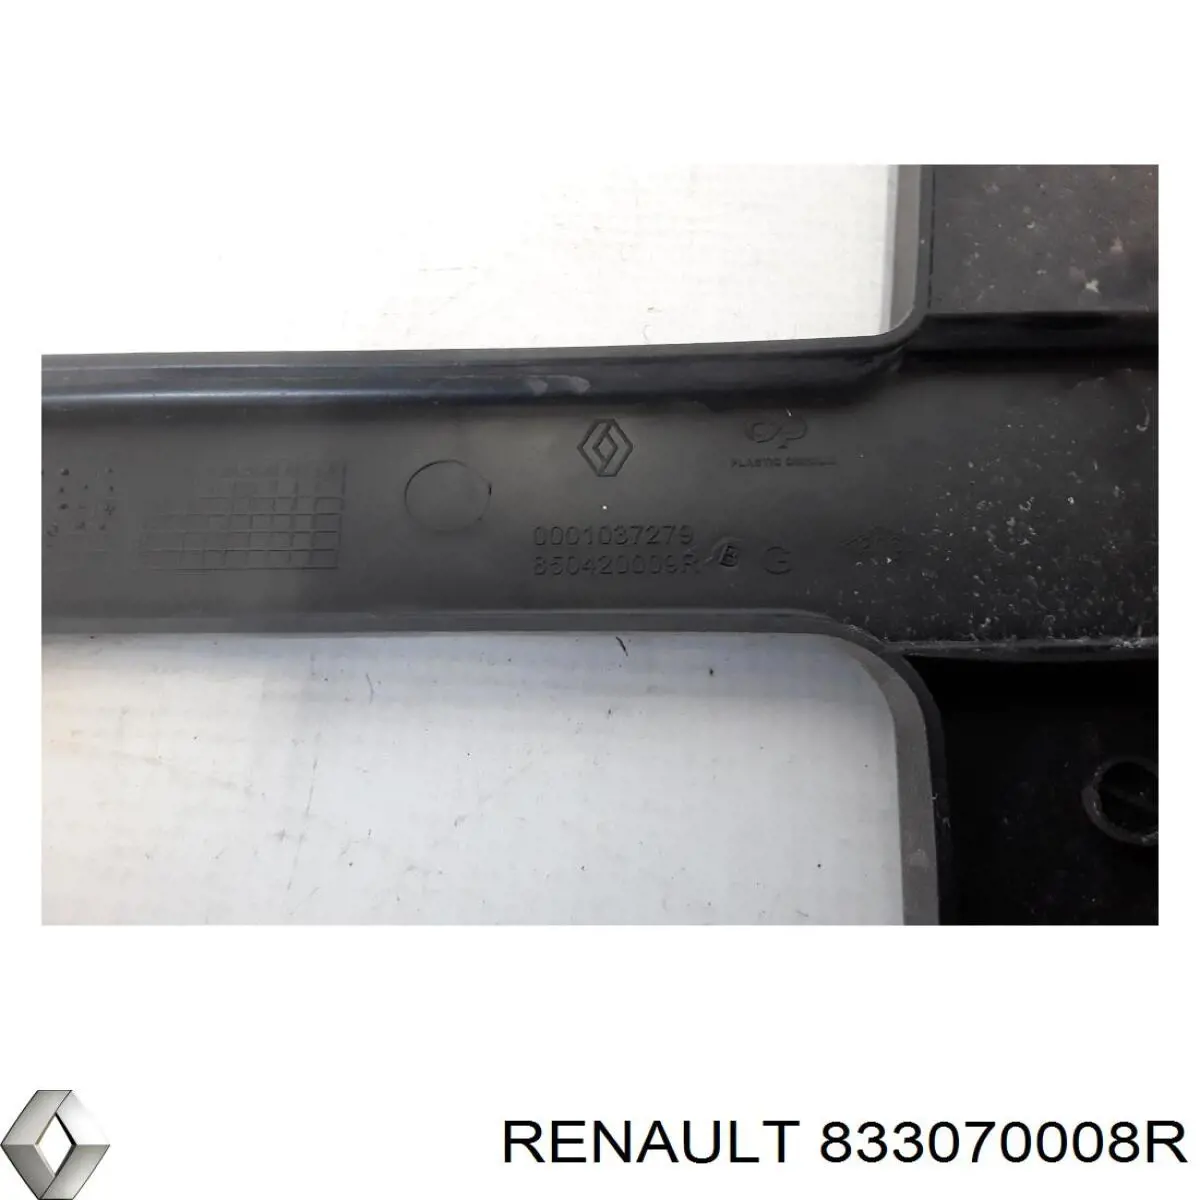 833070008R Renault (RVI) ventanilla costado superior izquierda (lado maletero)